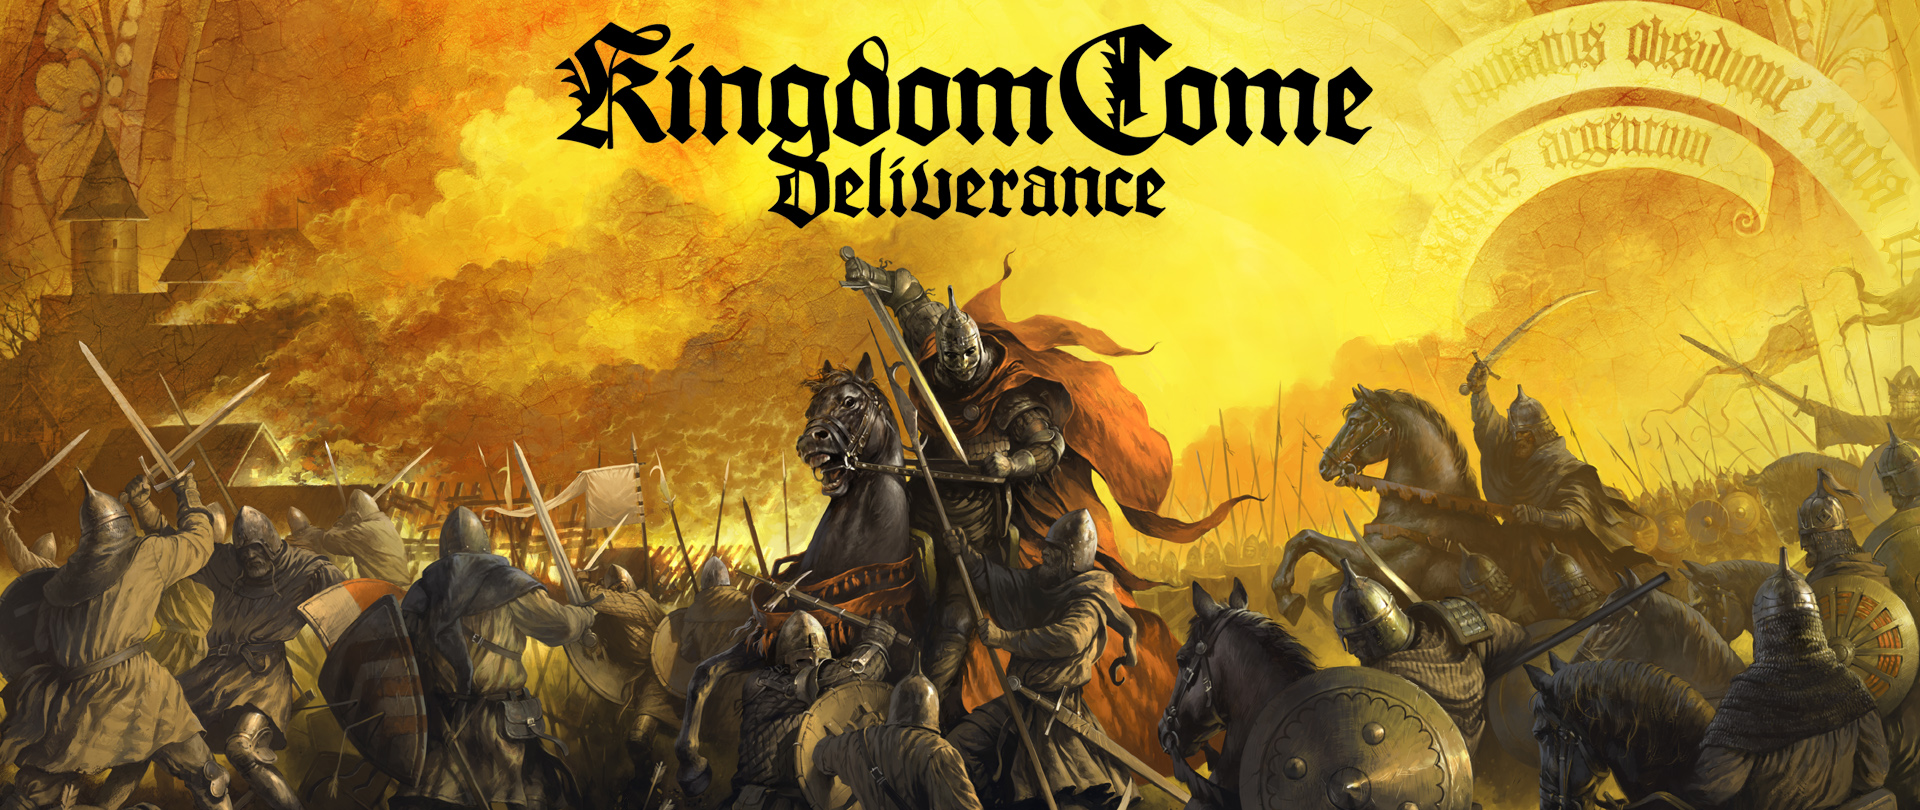 Desvelada la hoja de ruta de Kingdom Come: Deliverance